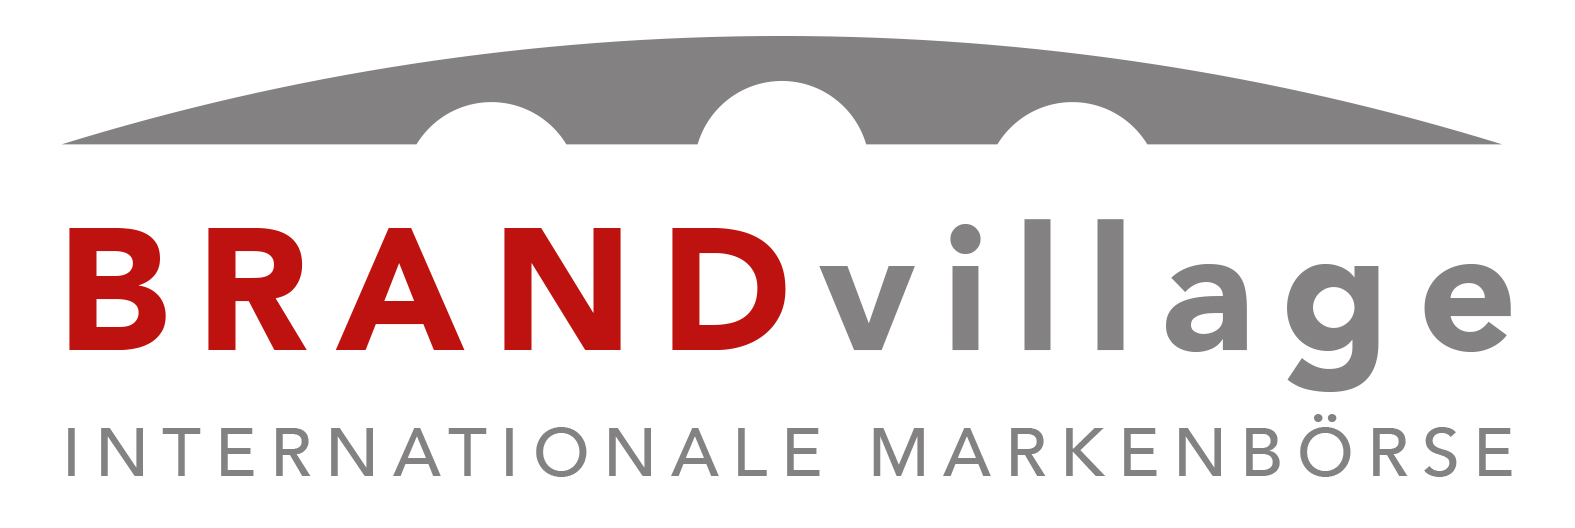 brandvillage logo